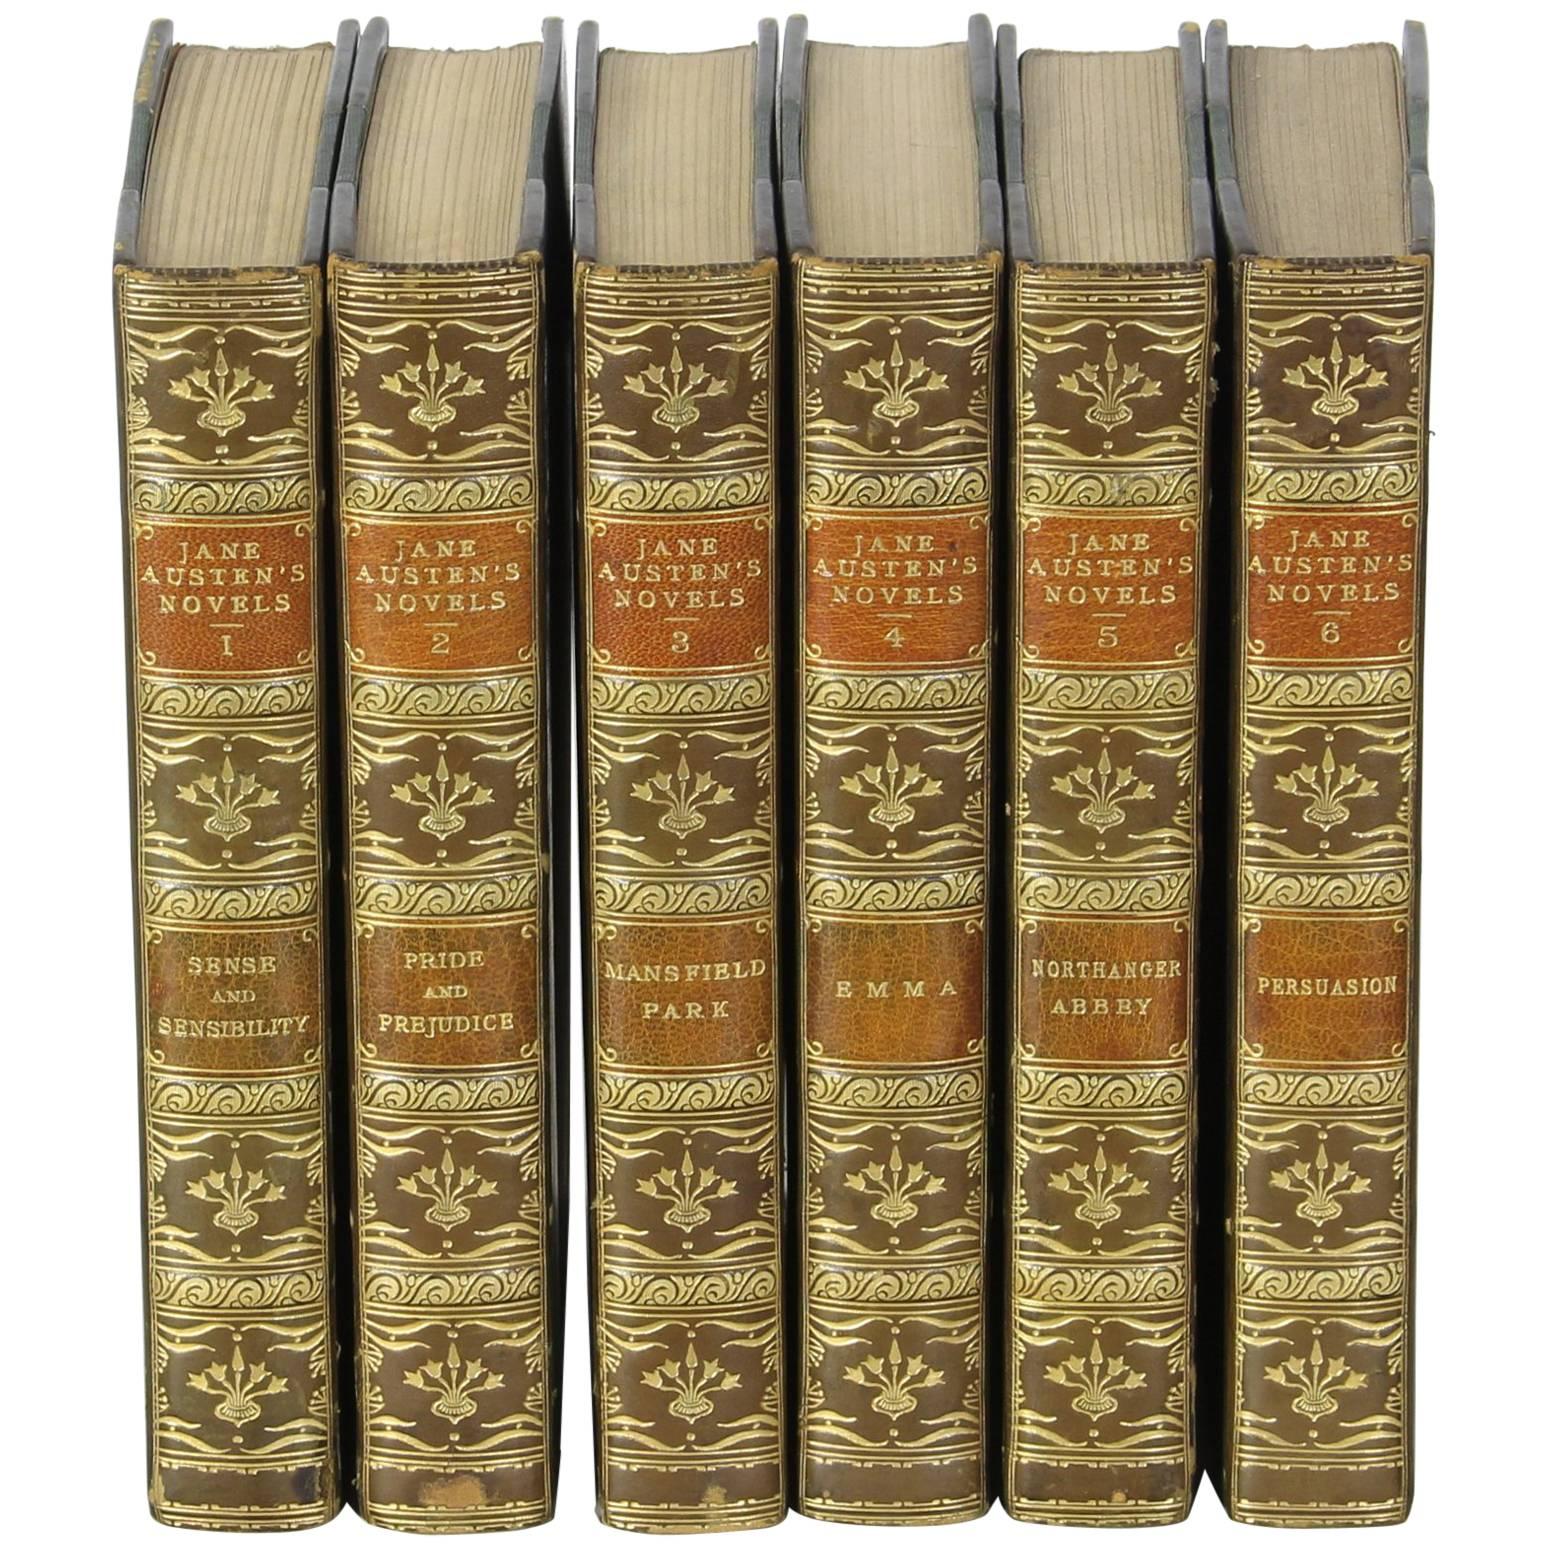 Handsome Collection of Jane Austen's Novels